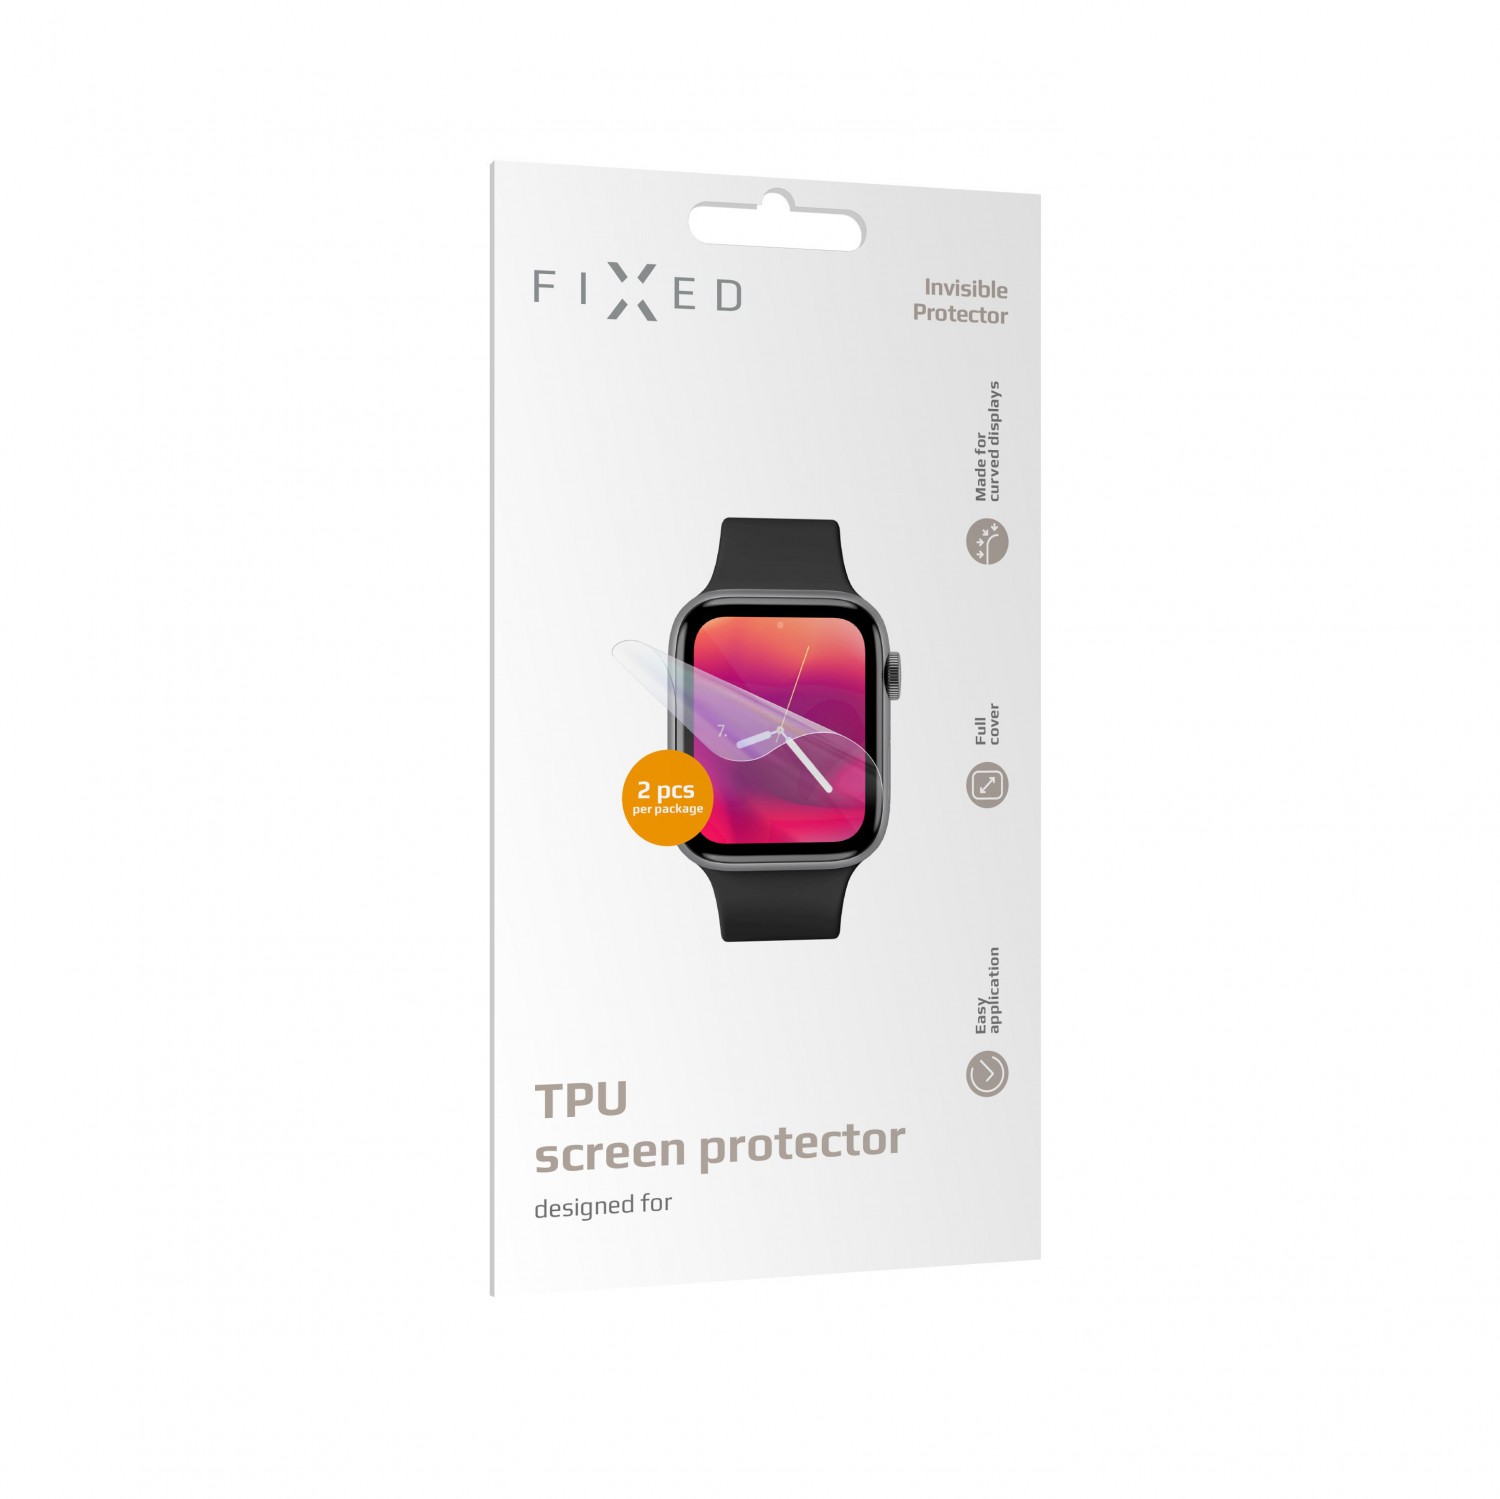 Silikonová folie FIXED Invisible Protector pro Xiaomi Mi Band 4 (2ks), čirá